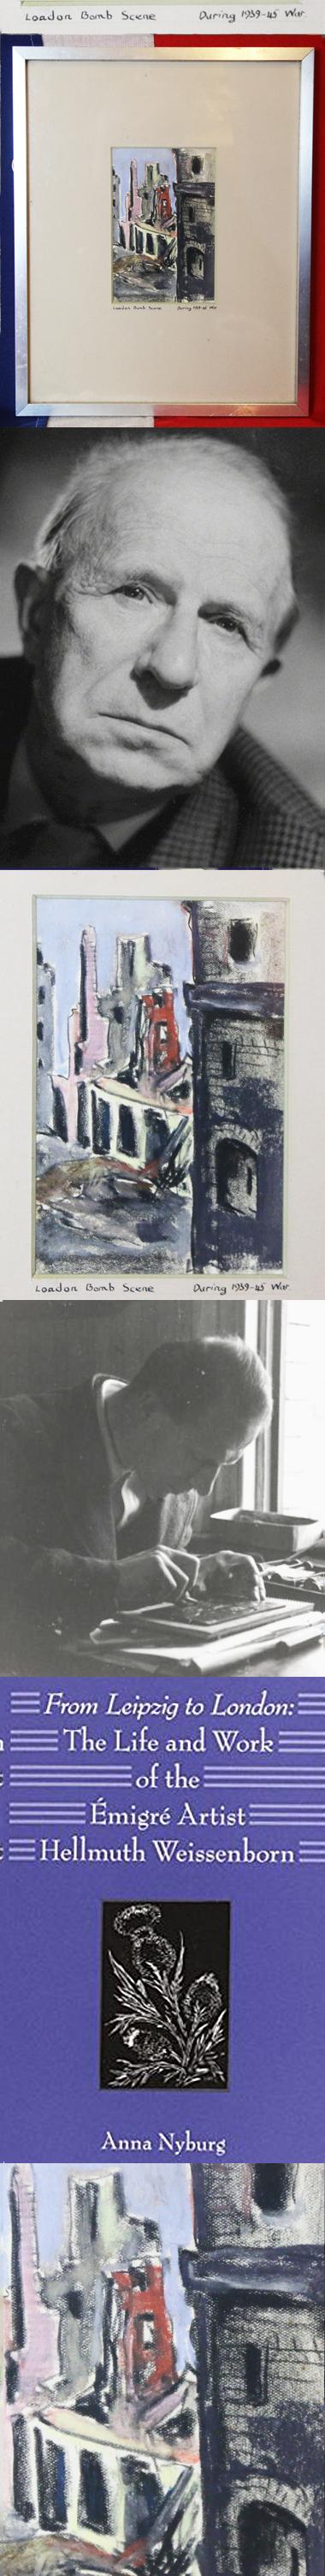 An Original Artwork of the London Blitz, 1939-1945, by WW2 Emigre German Artist Hellmuth Weissenborn, Famous Artist and Volunteer London Blitz Fireman